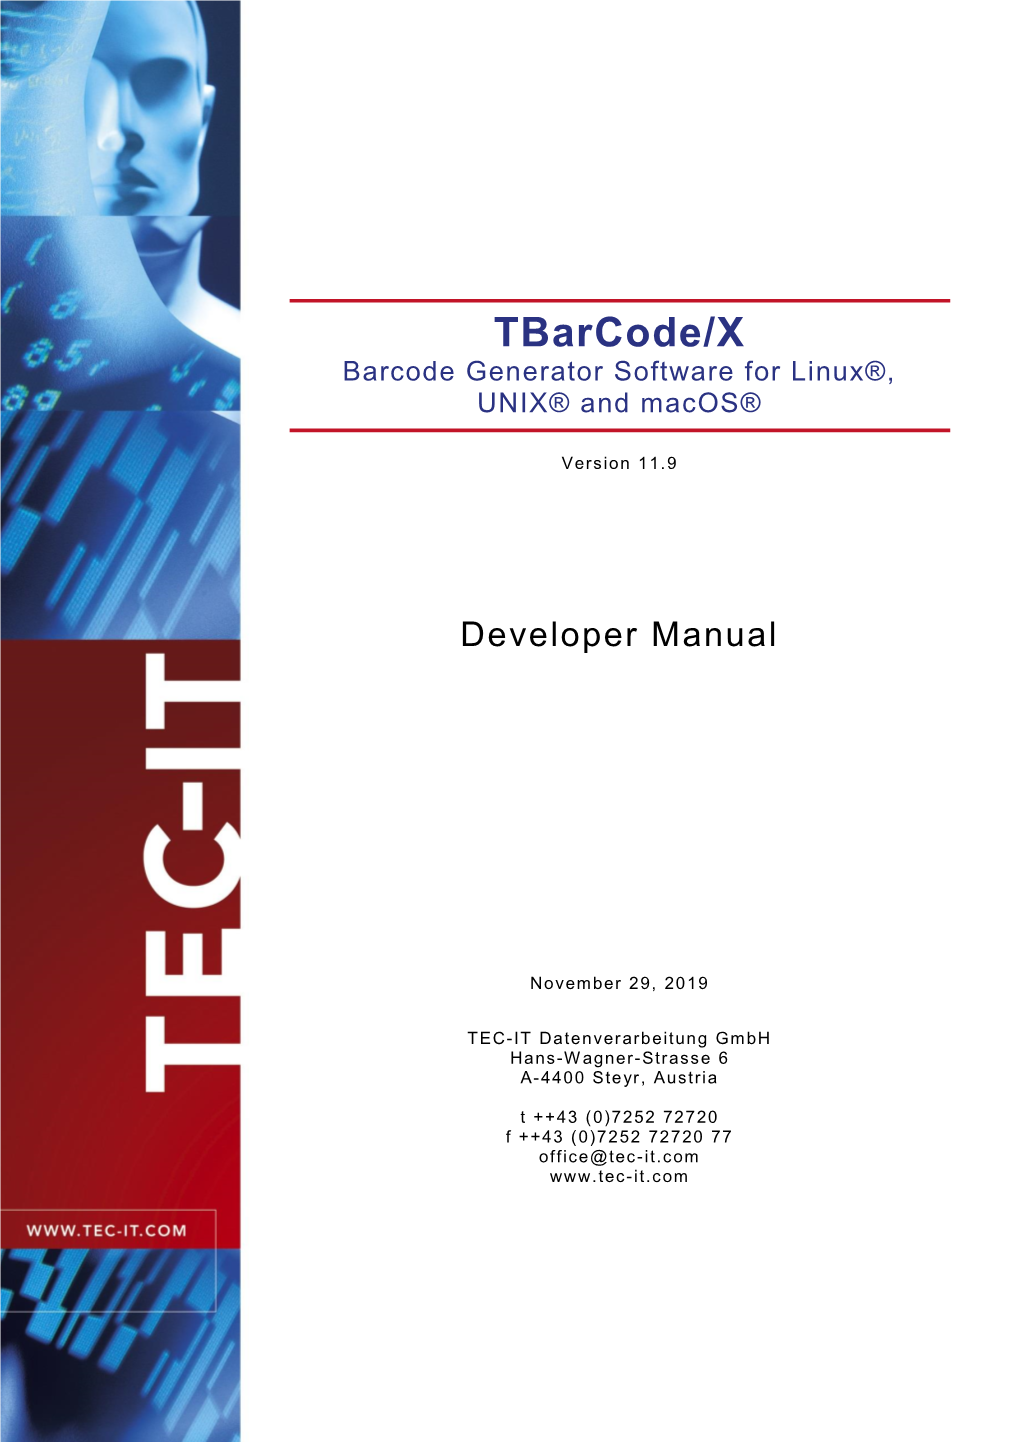 Tbarcode/X Developer Manual